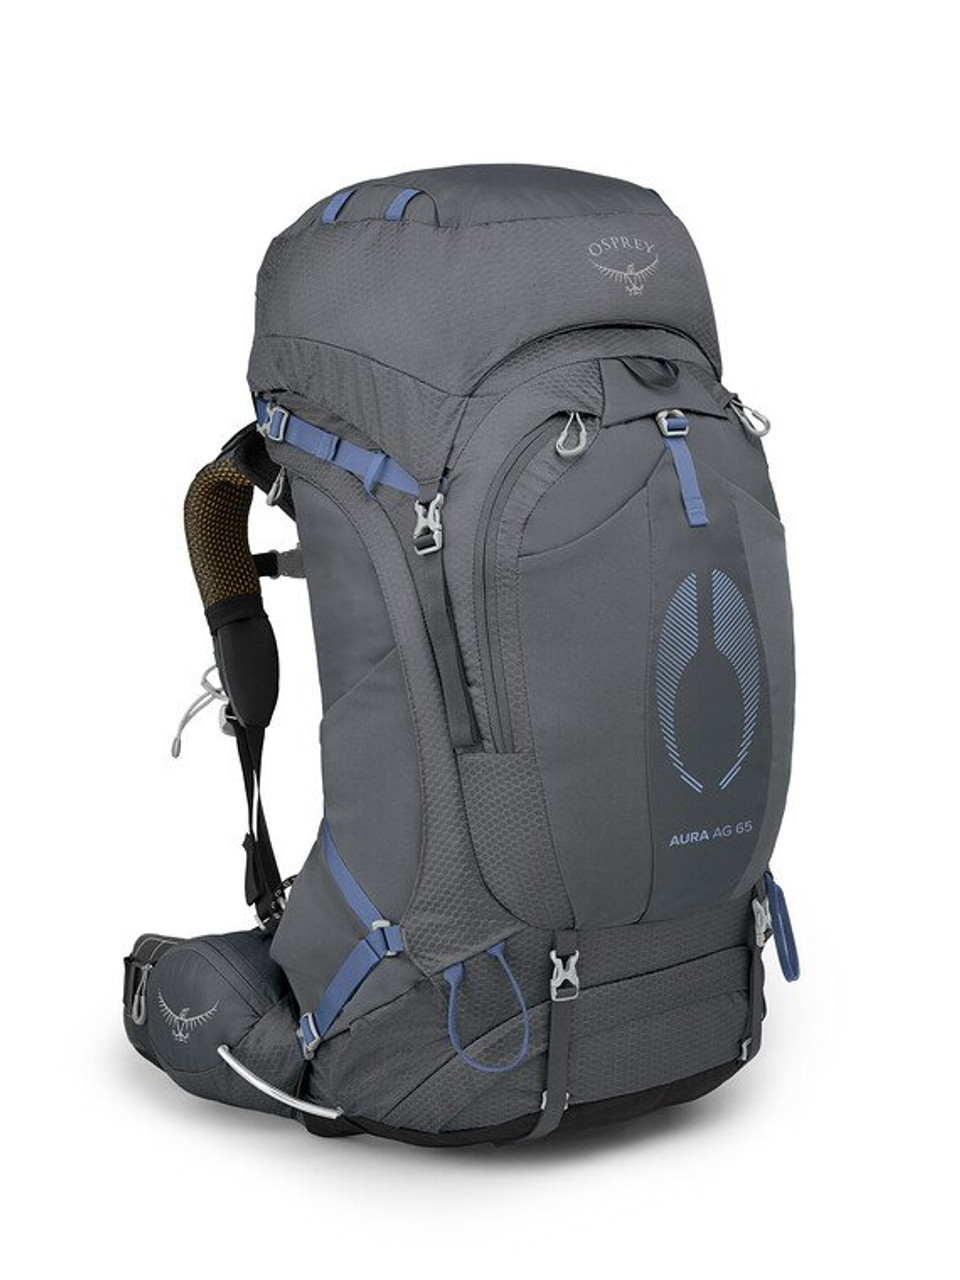 Osprey Aura 65 Backpack | Free Shipping Canada-wide